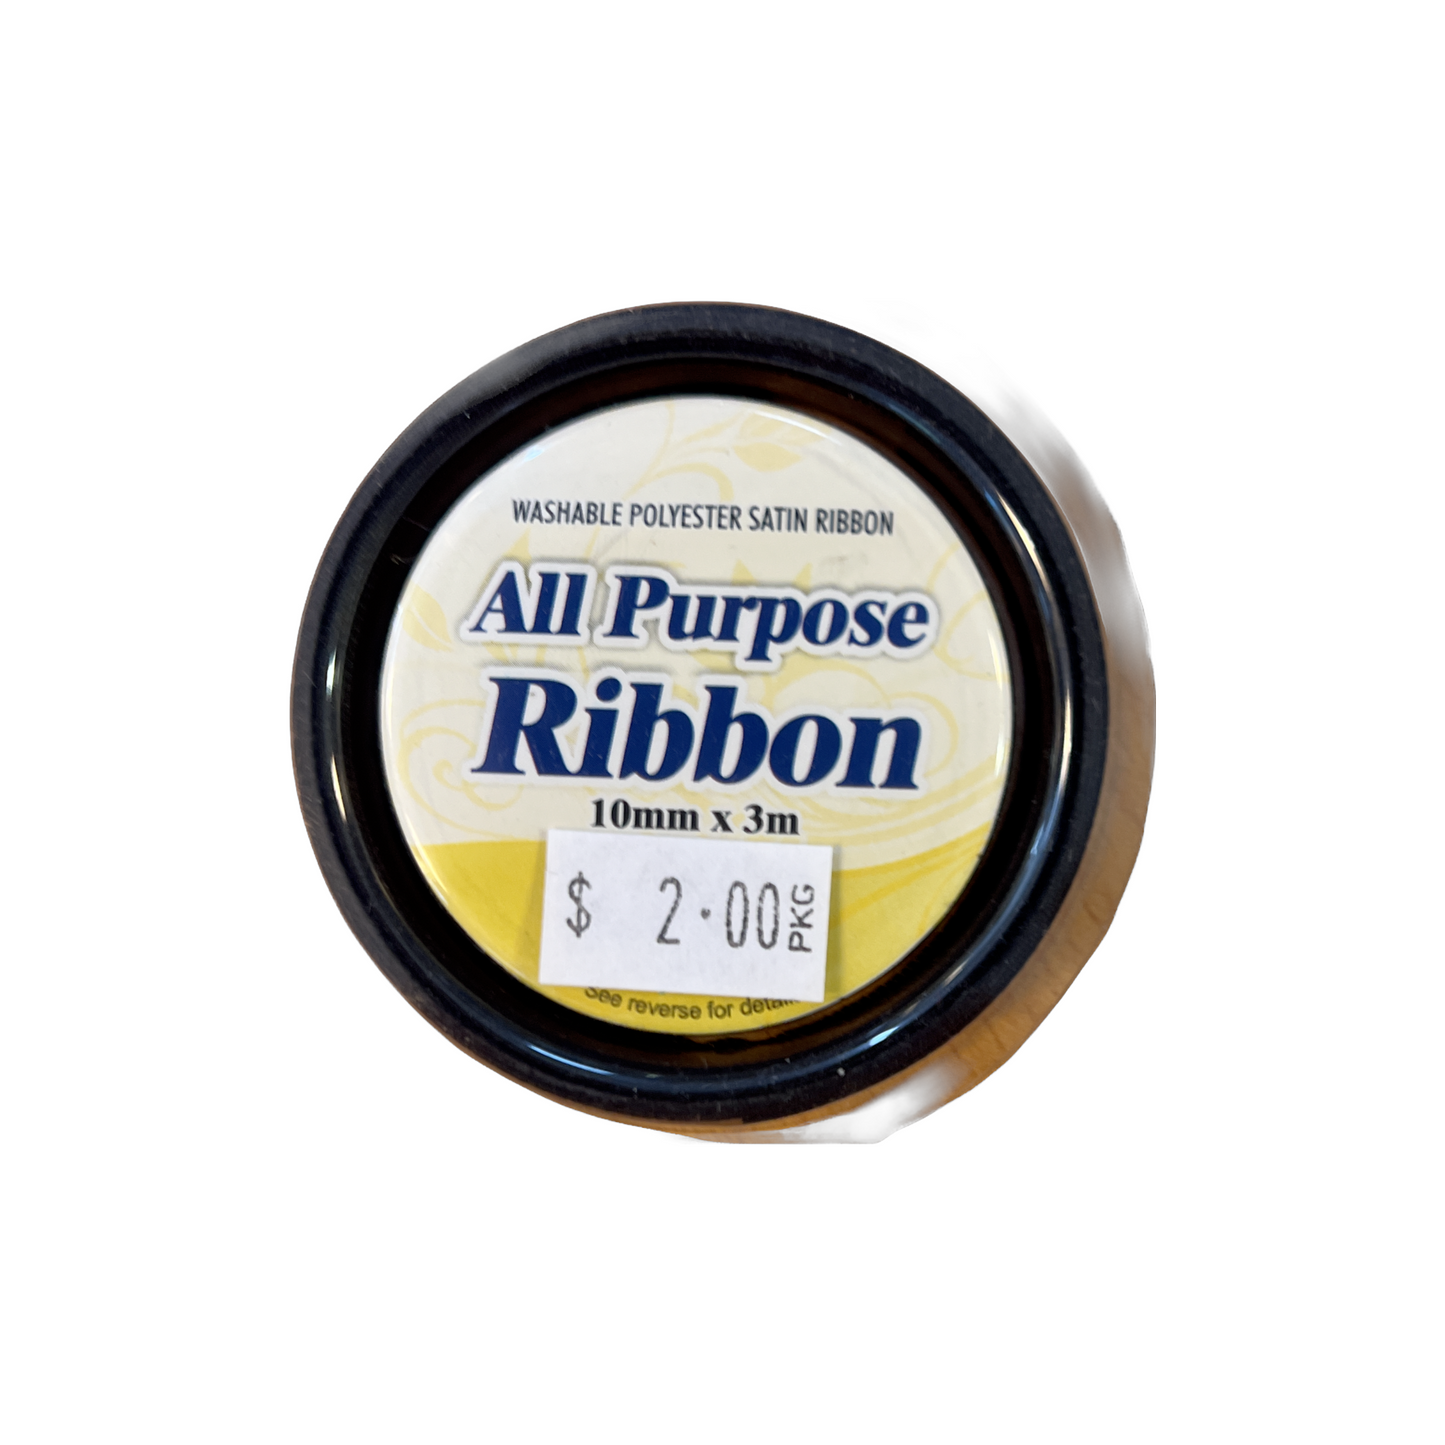 All Purpose Ribbon Black